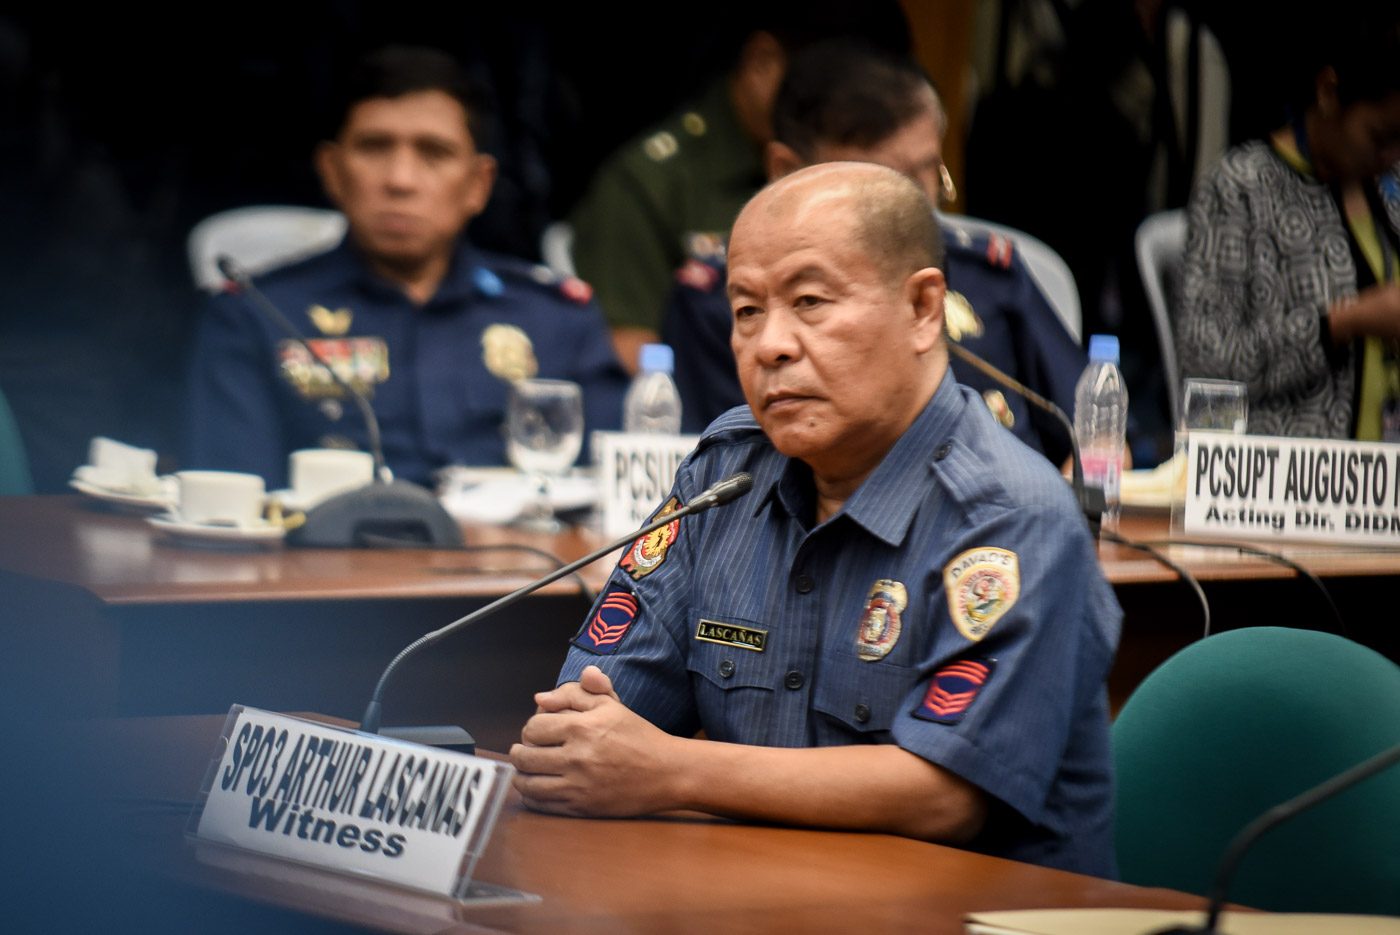 Senate summons Lascañas to Davao Death Squad probe